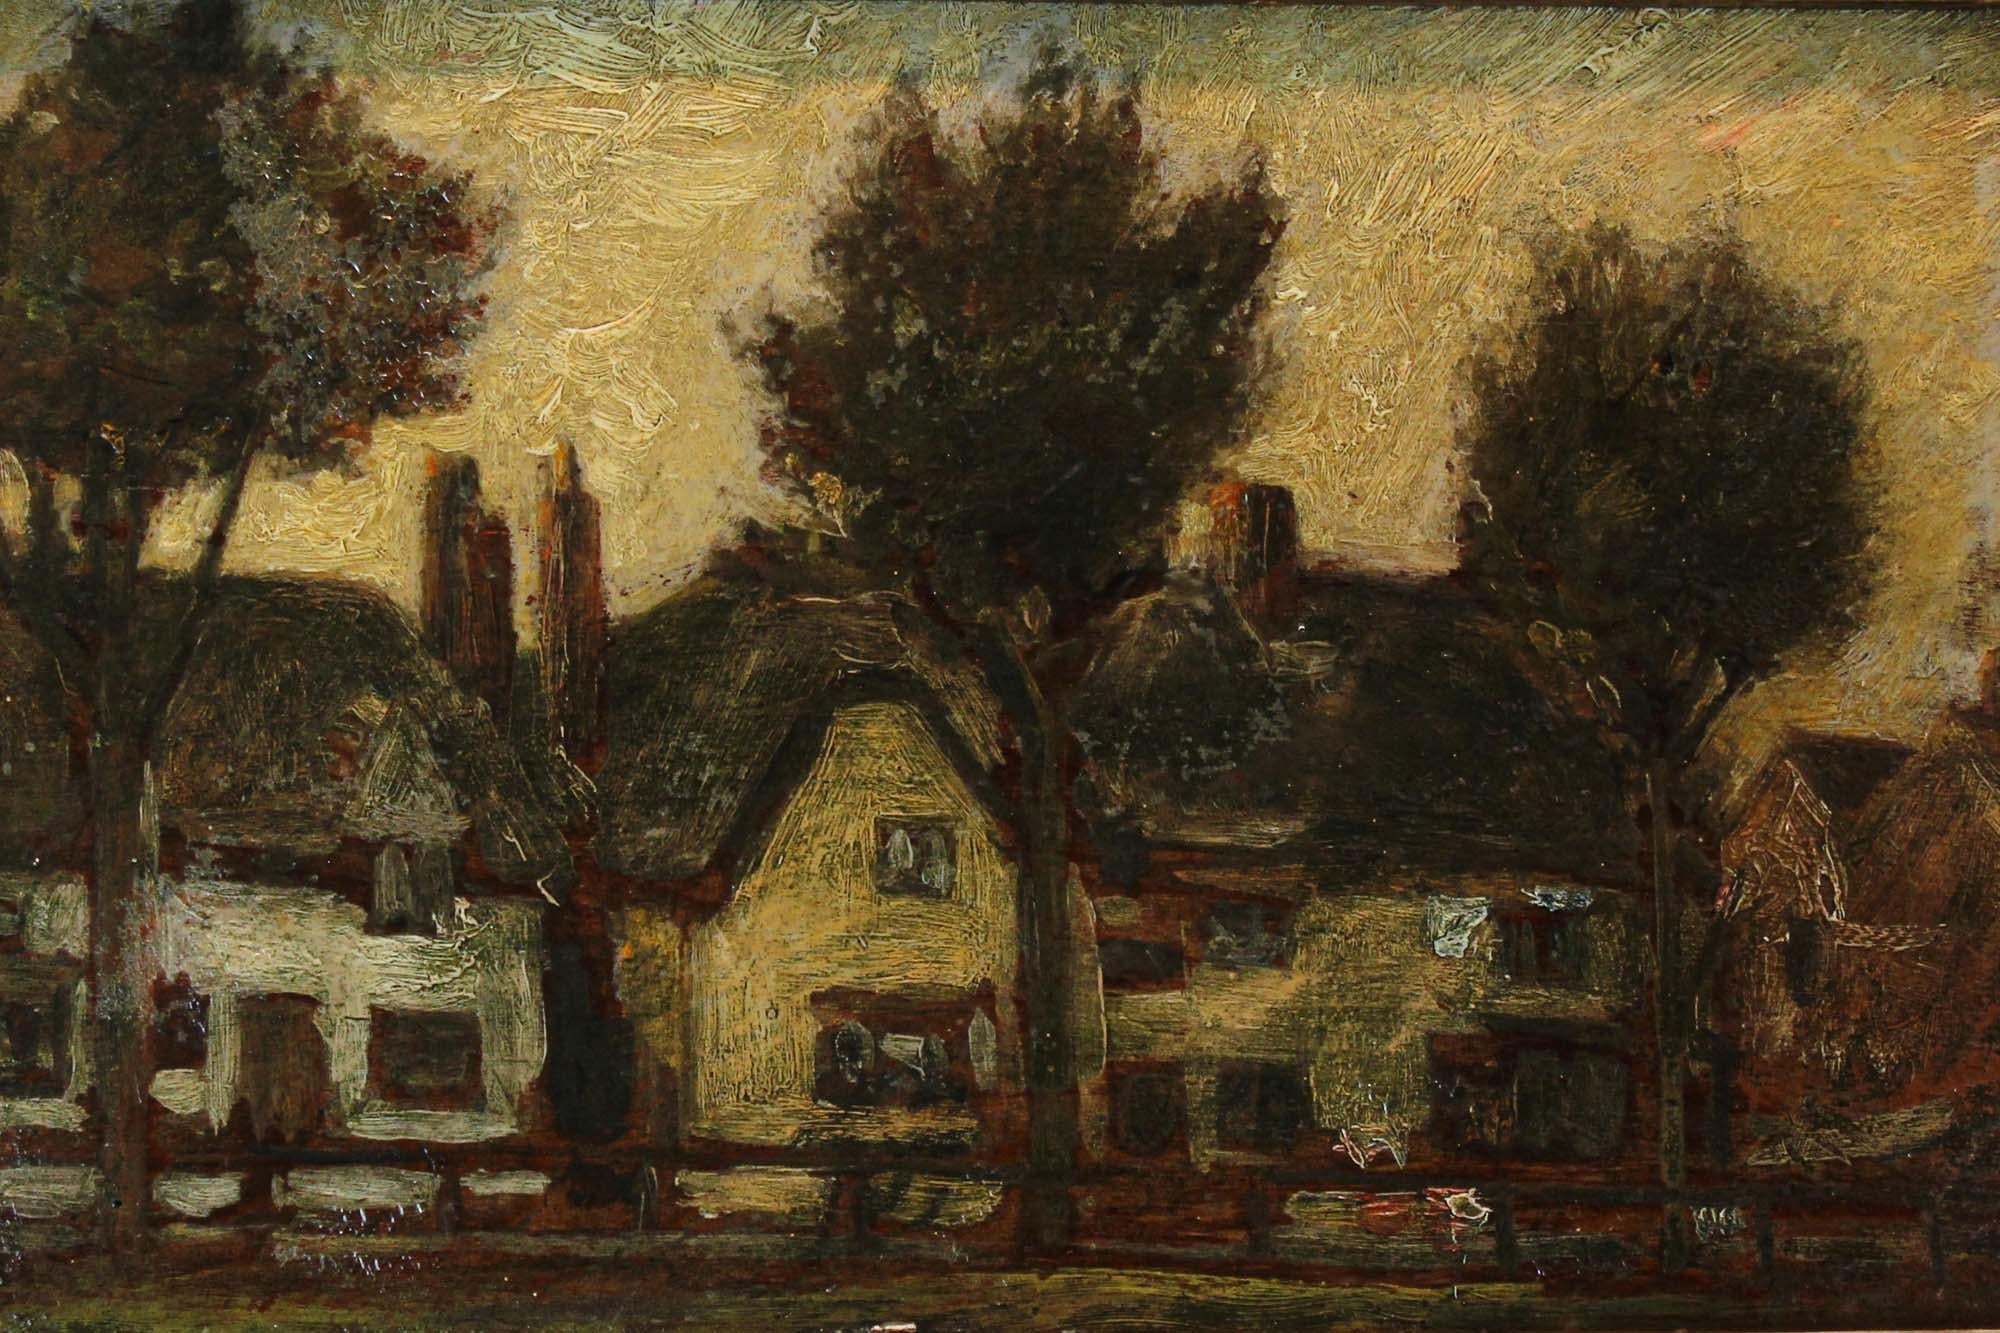 British 20th Century Unknown Artist Oil on Panel Painting, Landscape